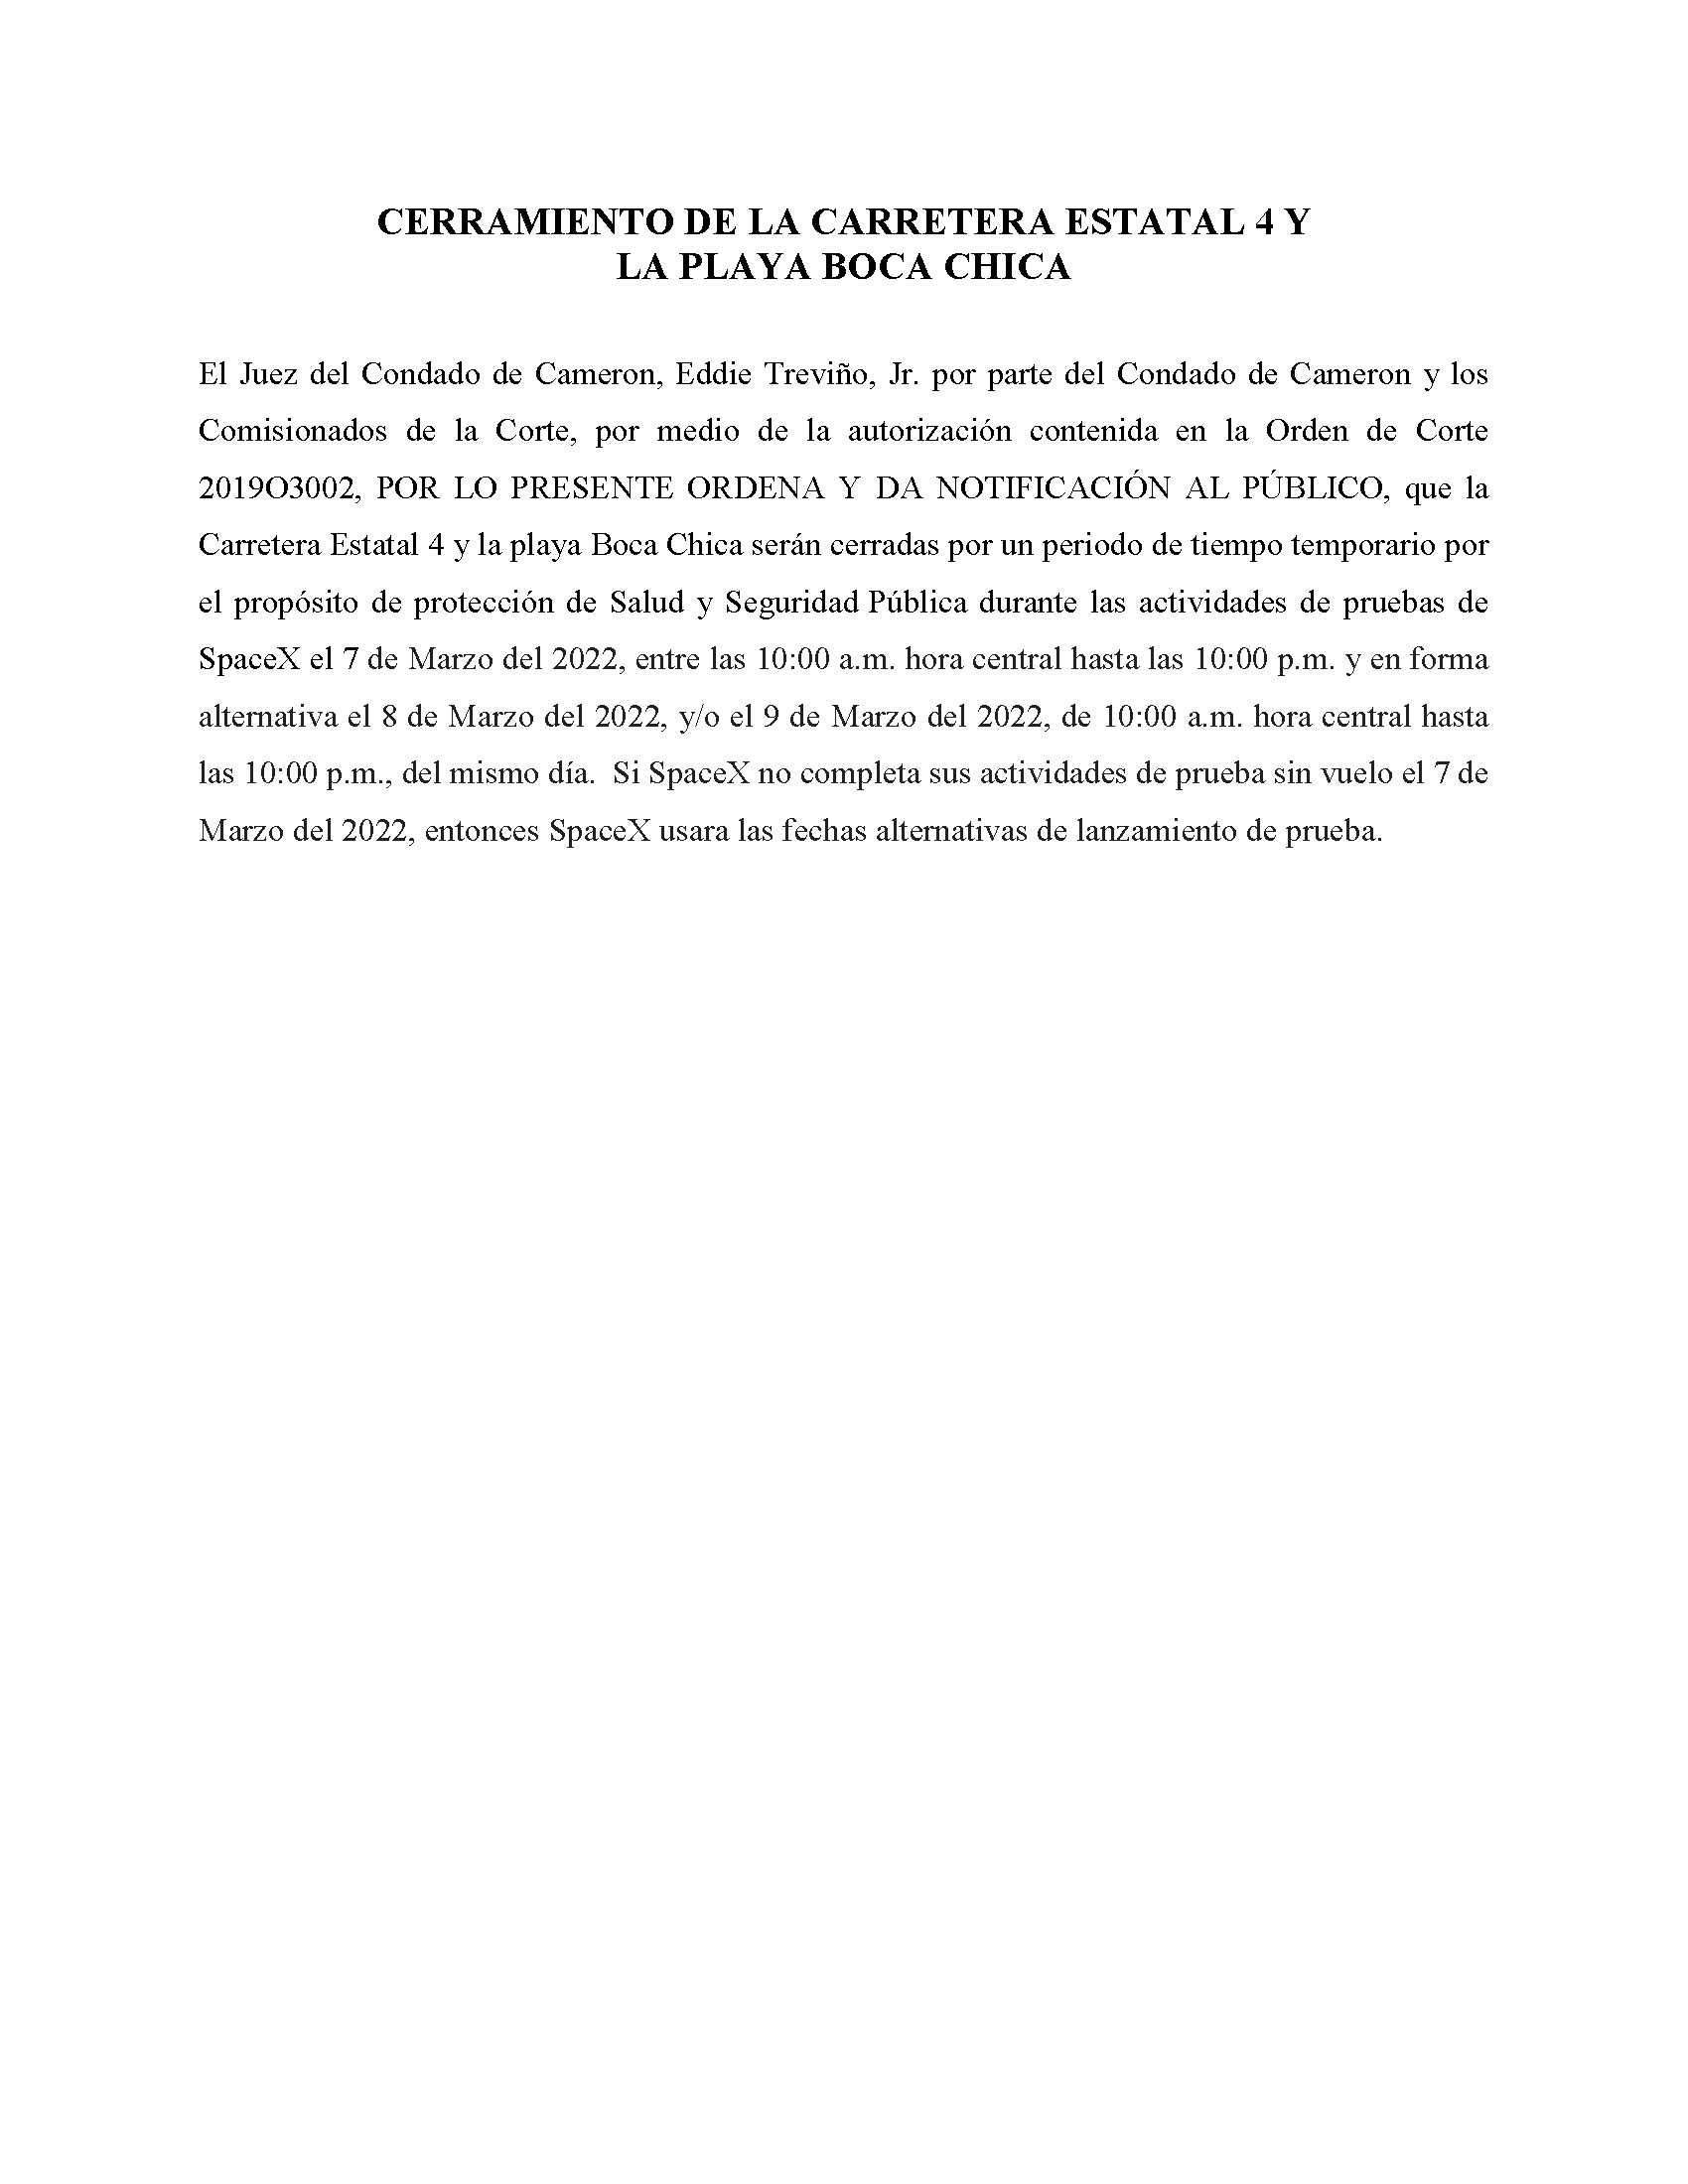 ORDER.CLOSURE OF HIGHWAY 4 Y LA PLAYA BOCA CHICA.SPANISH.03.07.2022